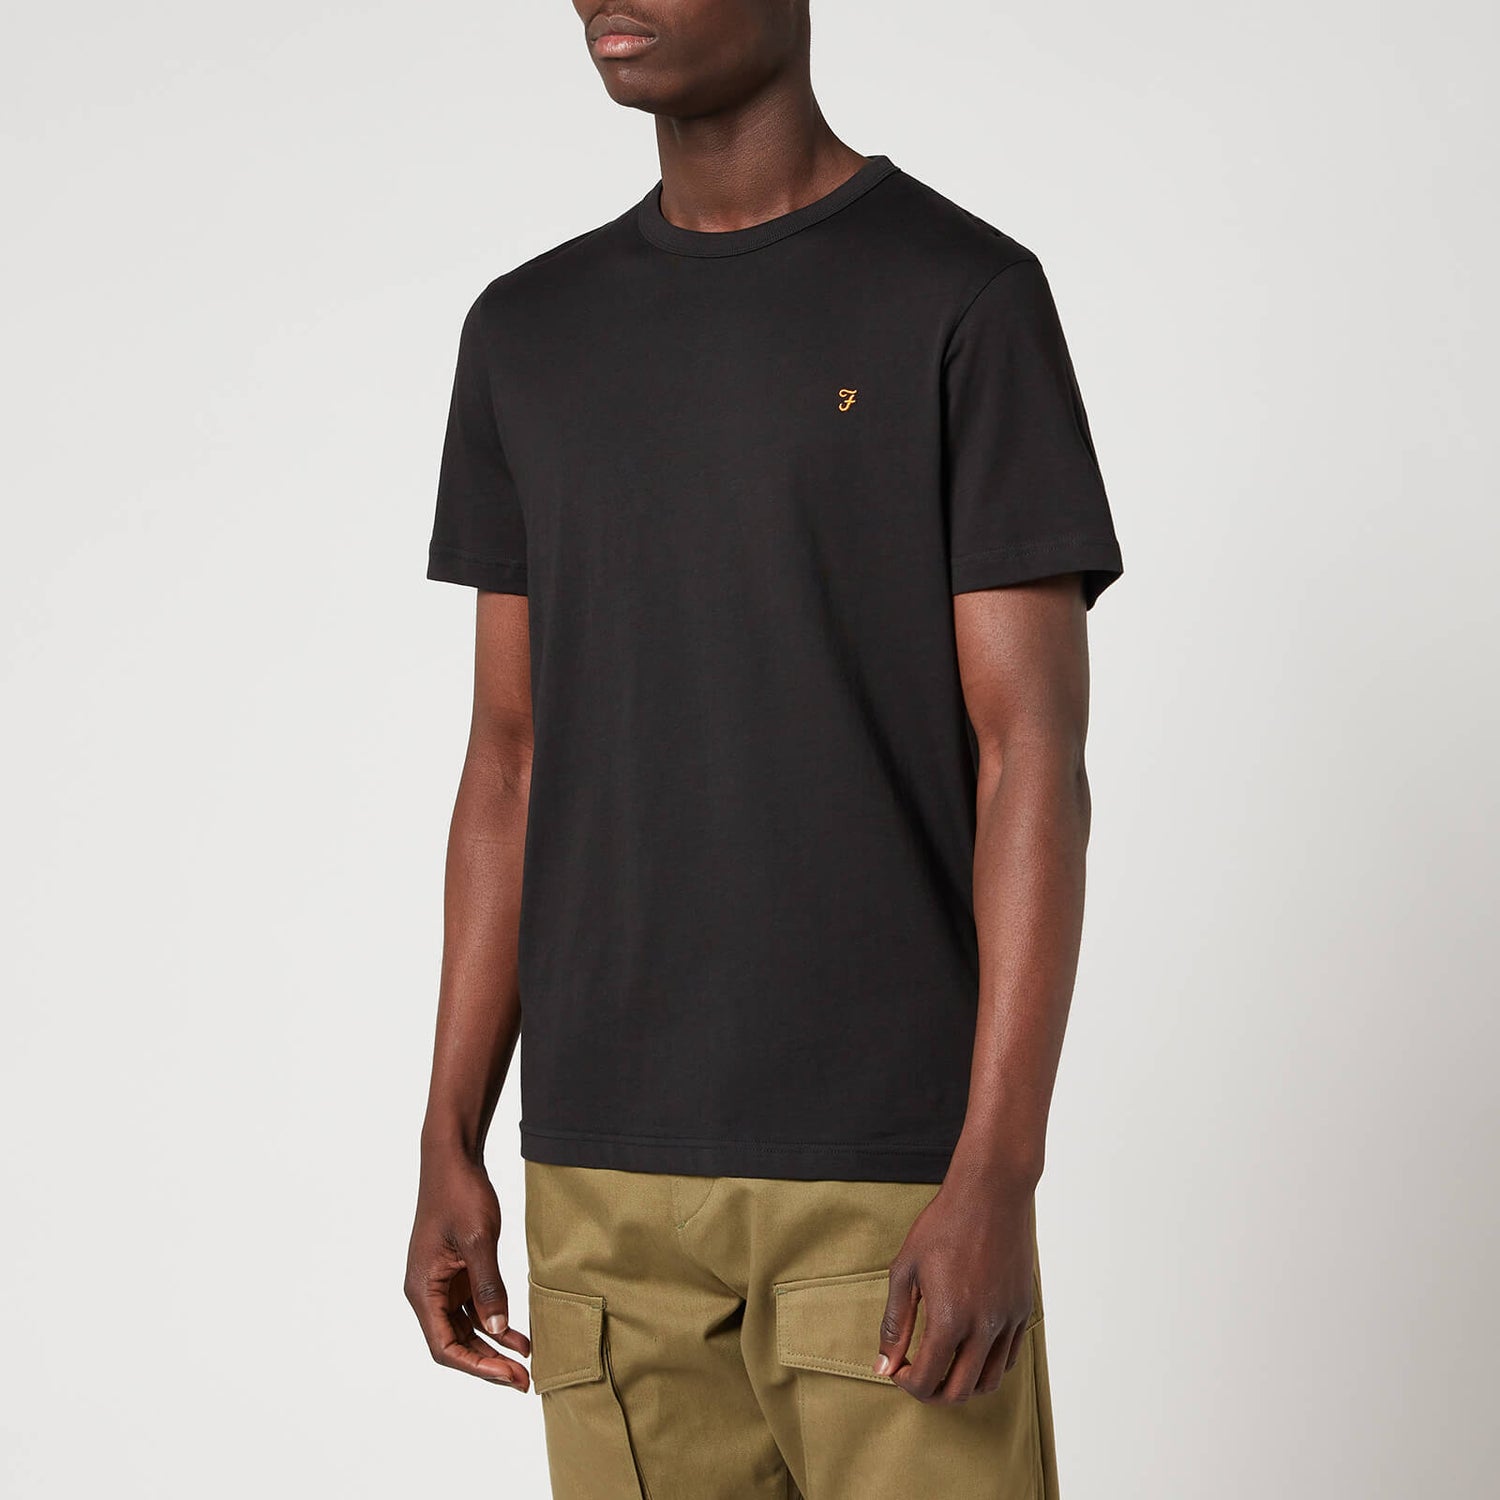 Farah Men's Danny T-Shirt - Black - S